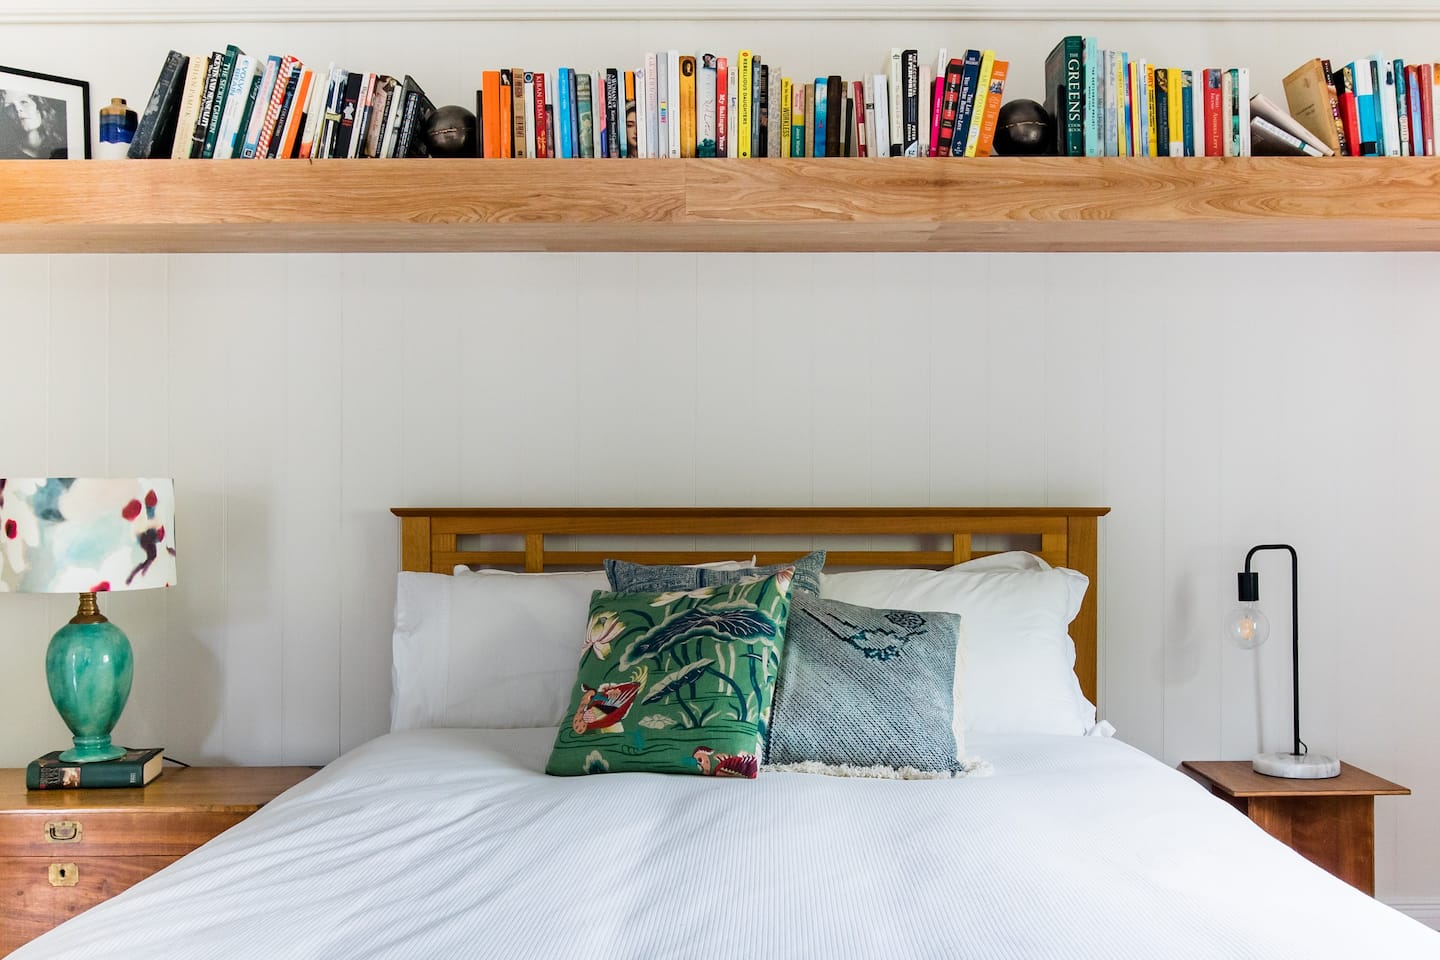 a bed under a shelf of books